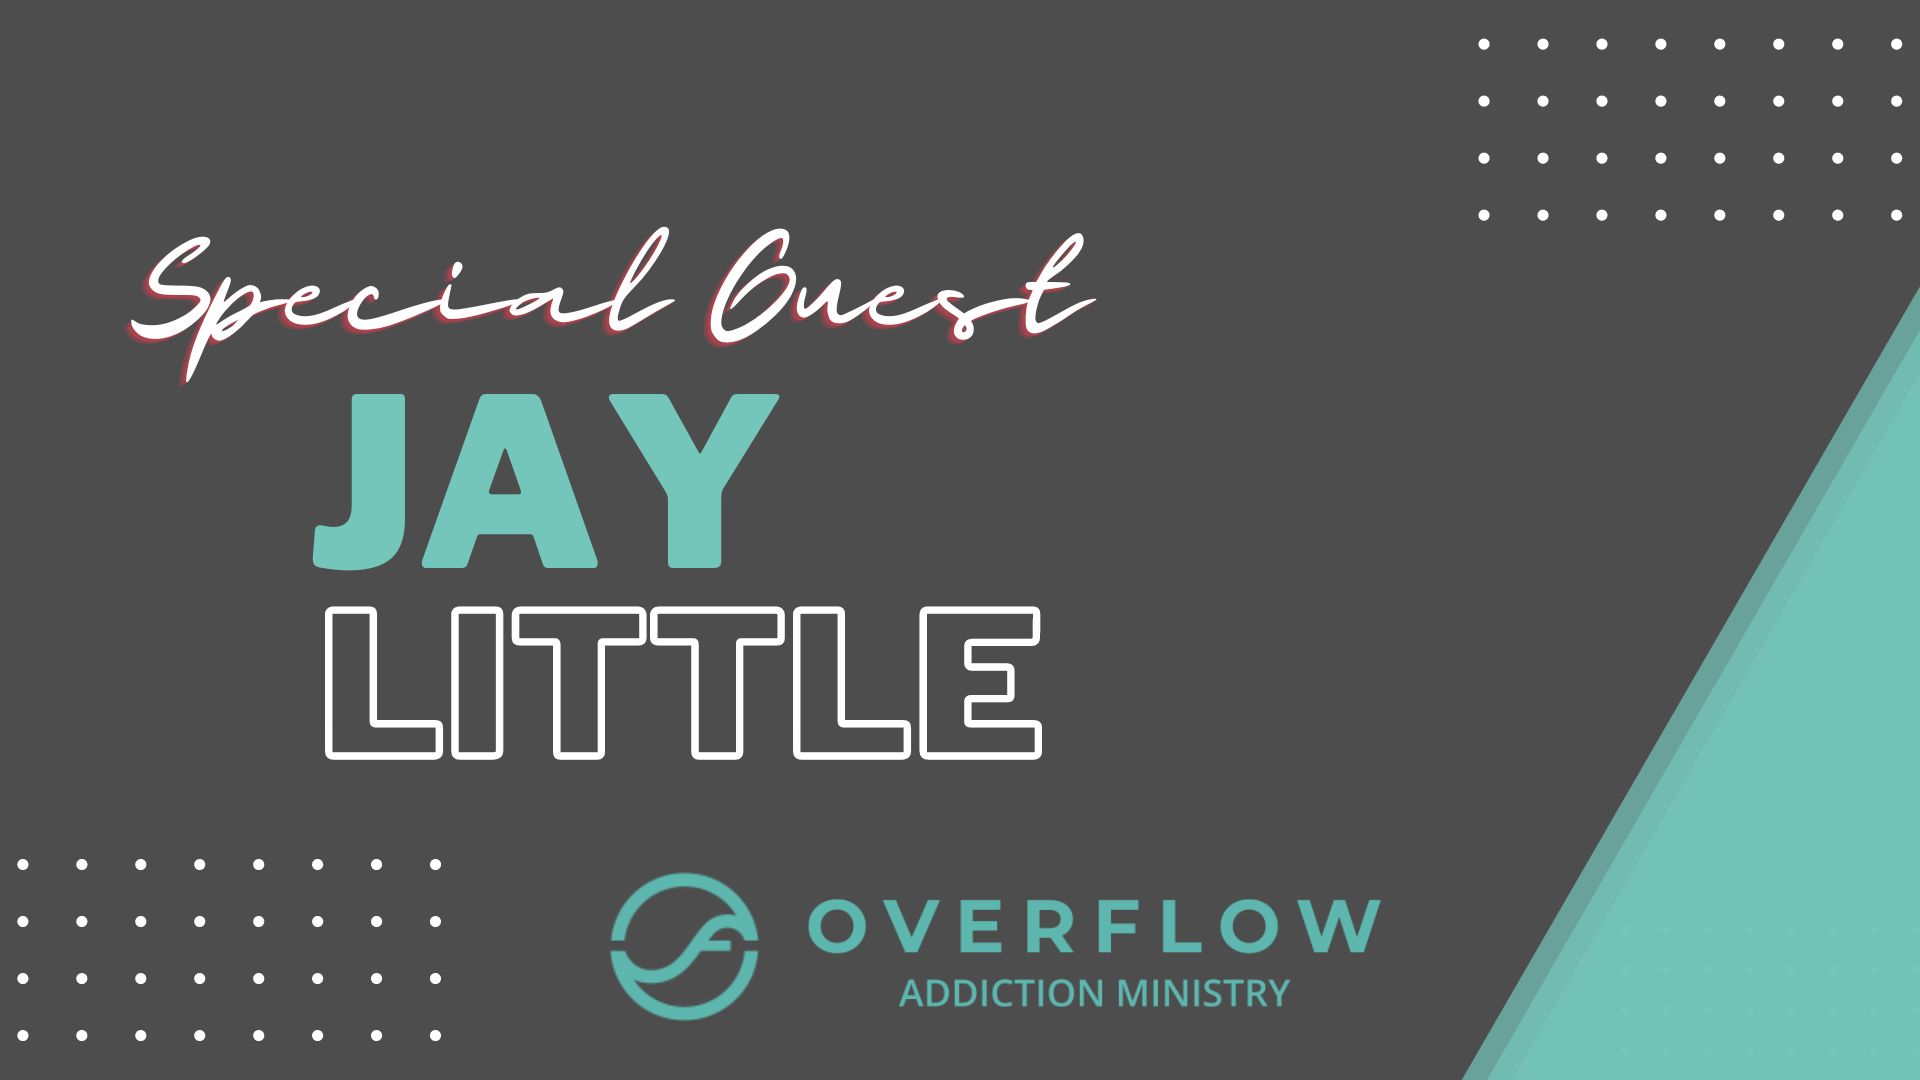 Overflow Addiction Ministry - Jay Little